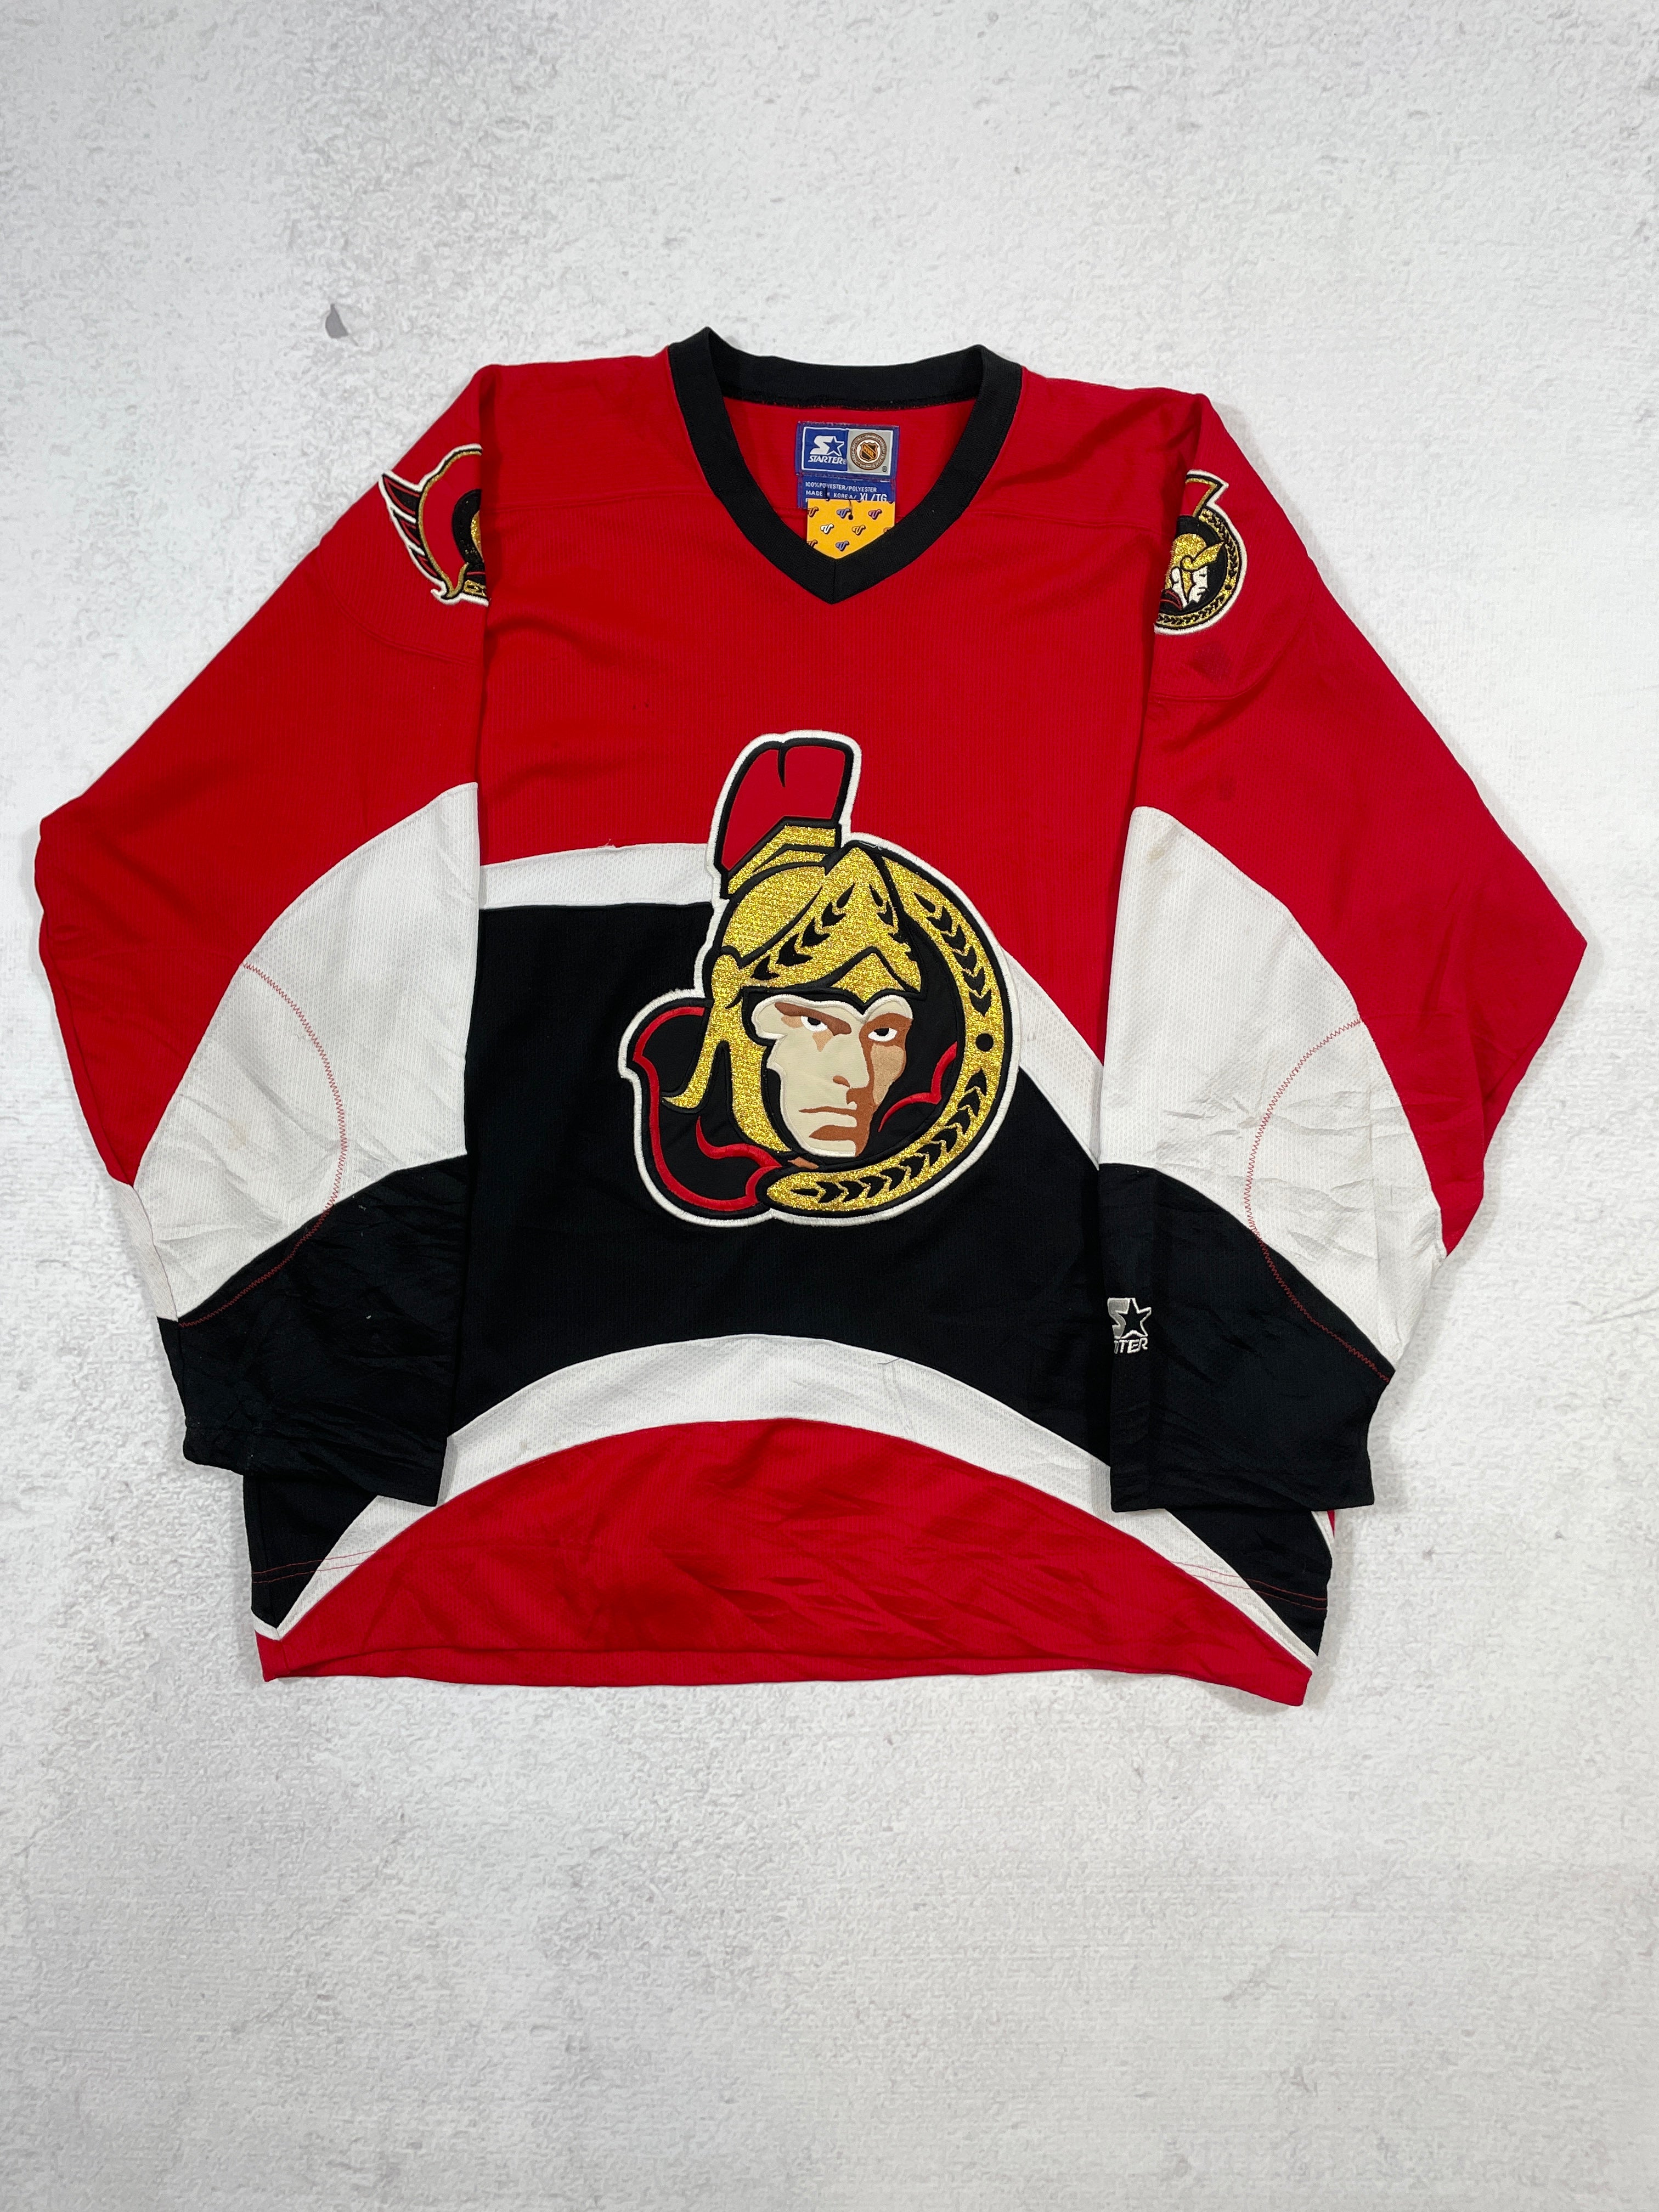 Vintage NHL Ottawa Senators Jersey - Men's XL